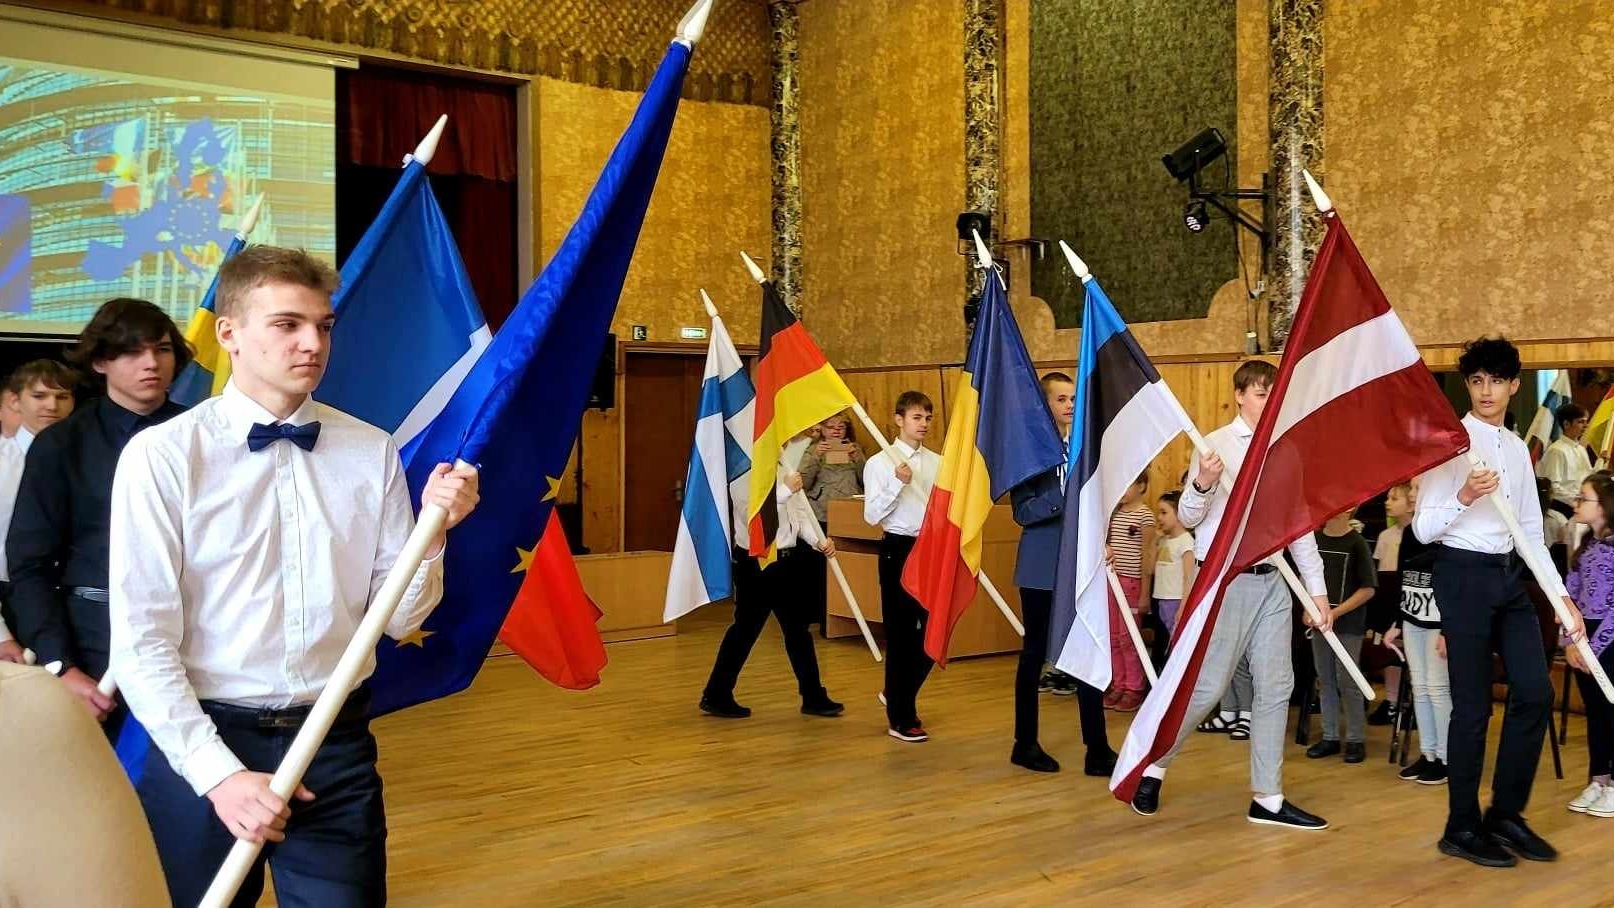 Rīgas Daugavgrīvas pamatskola svin Eiropas svētkus  “Eiro – vīzija: Ceļojums pa Eiropu”